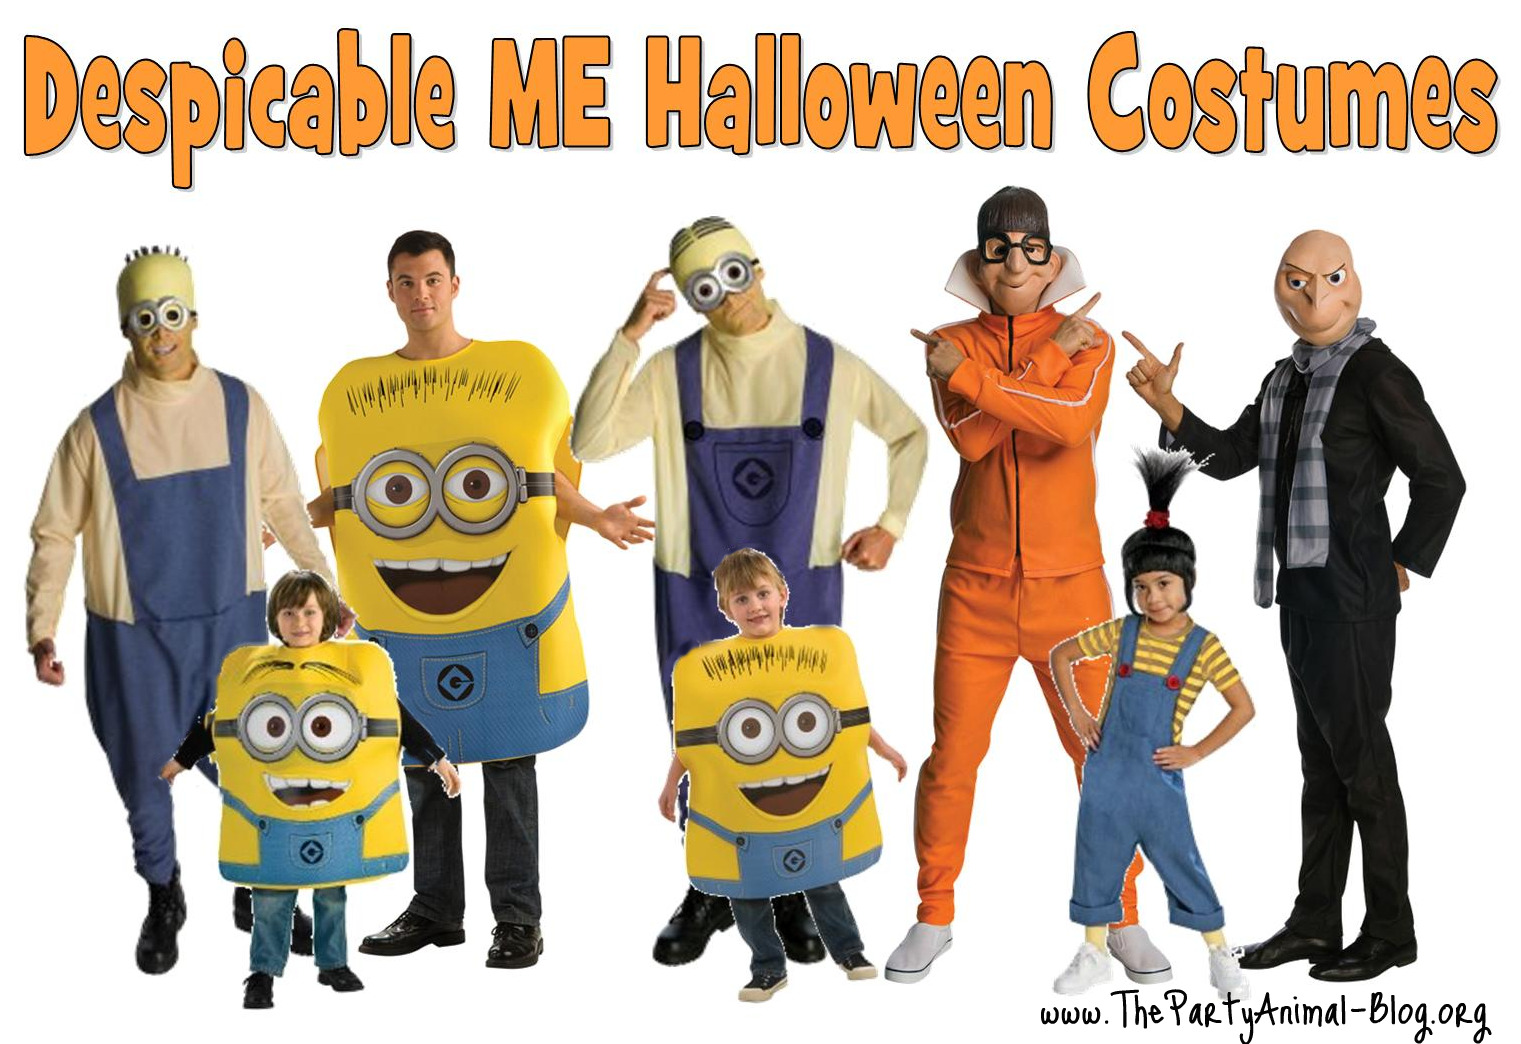 Vector Costume. agnes-costume. despicable-me-minion-costumes. halloween-p.....